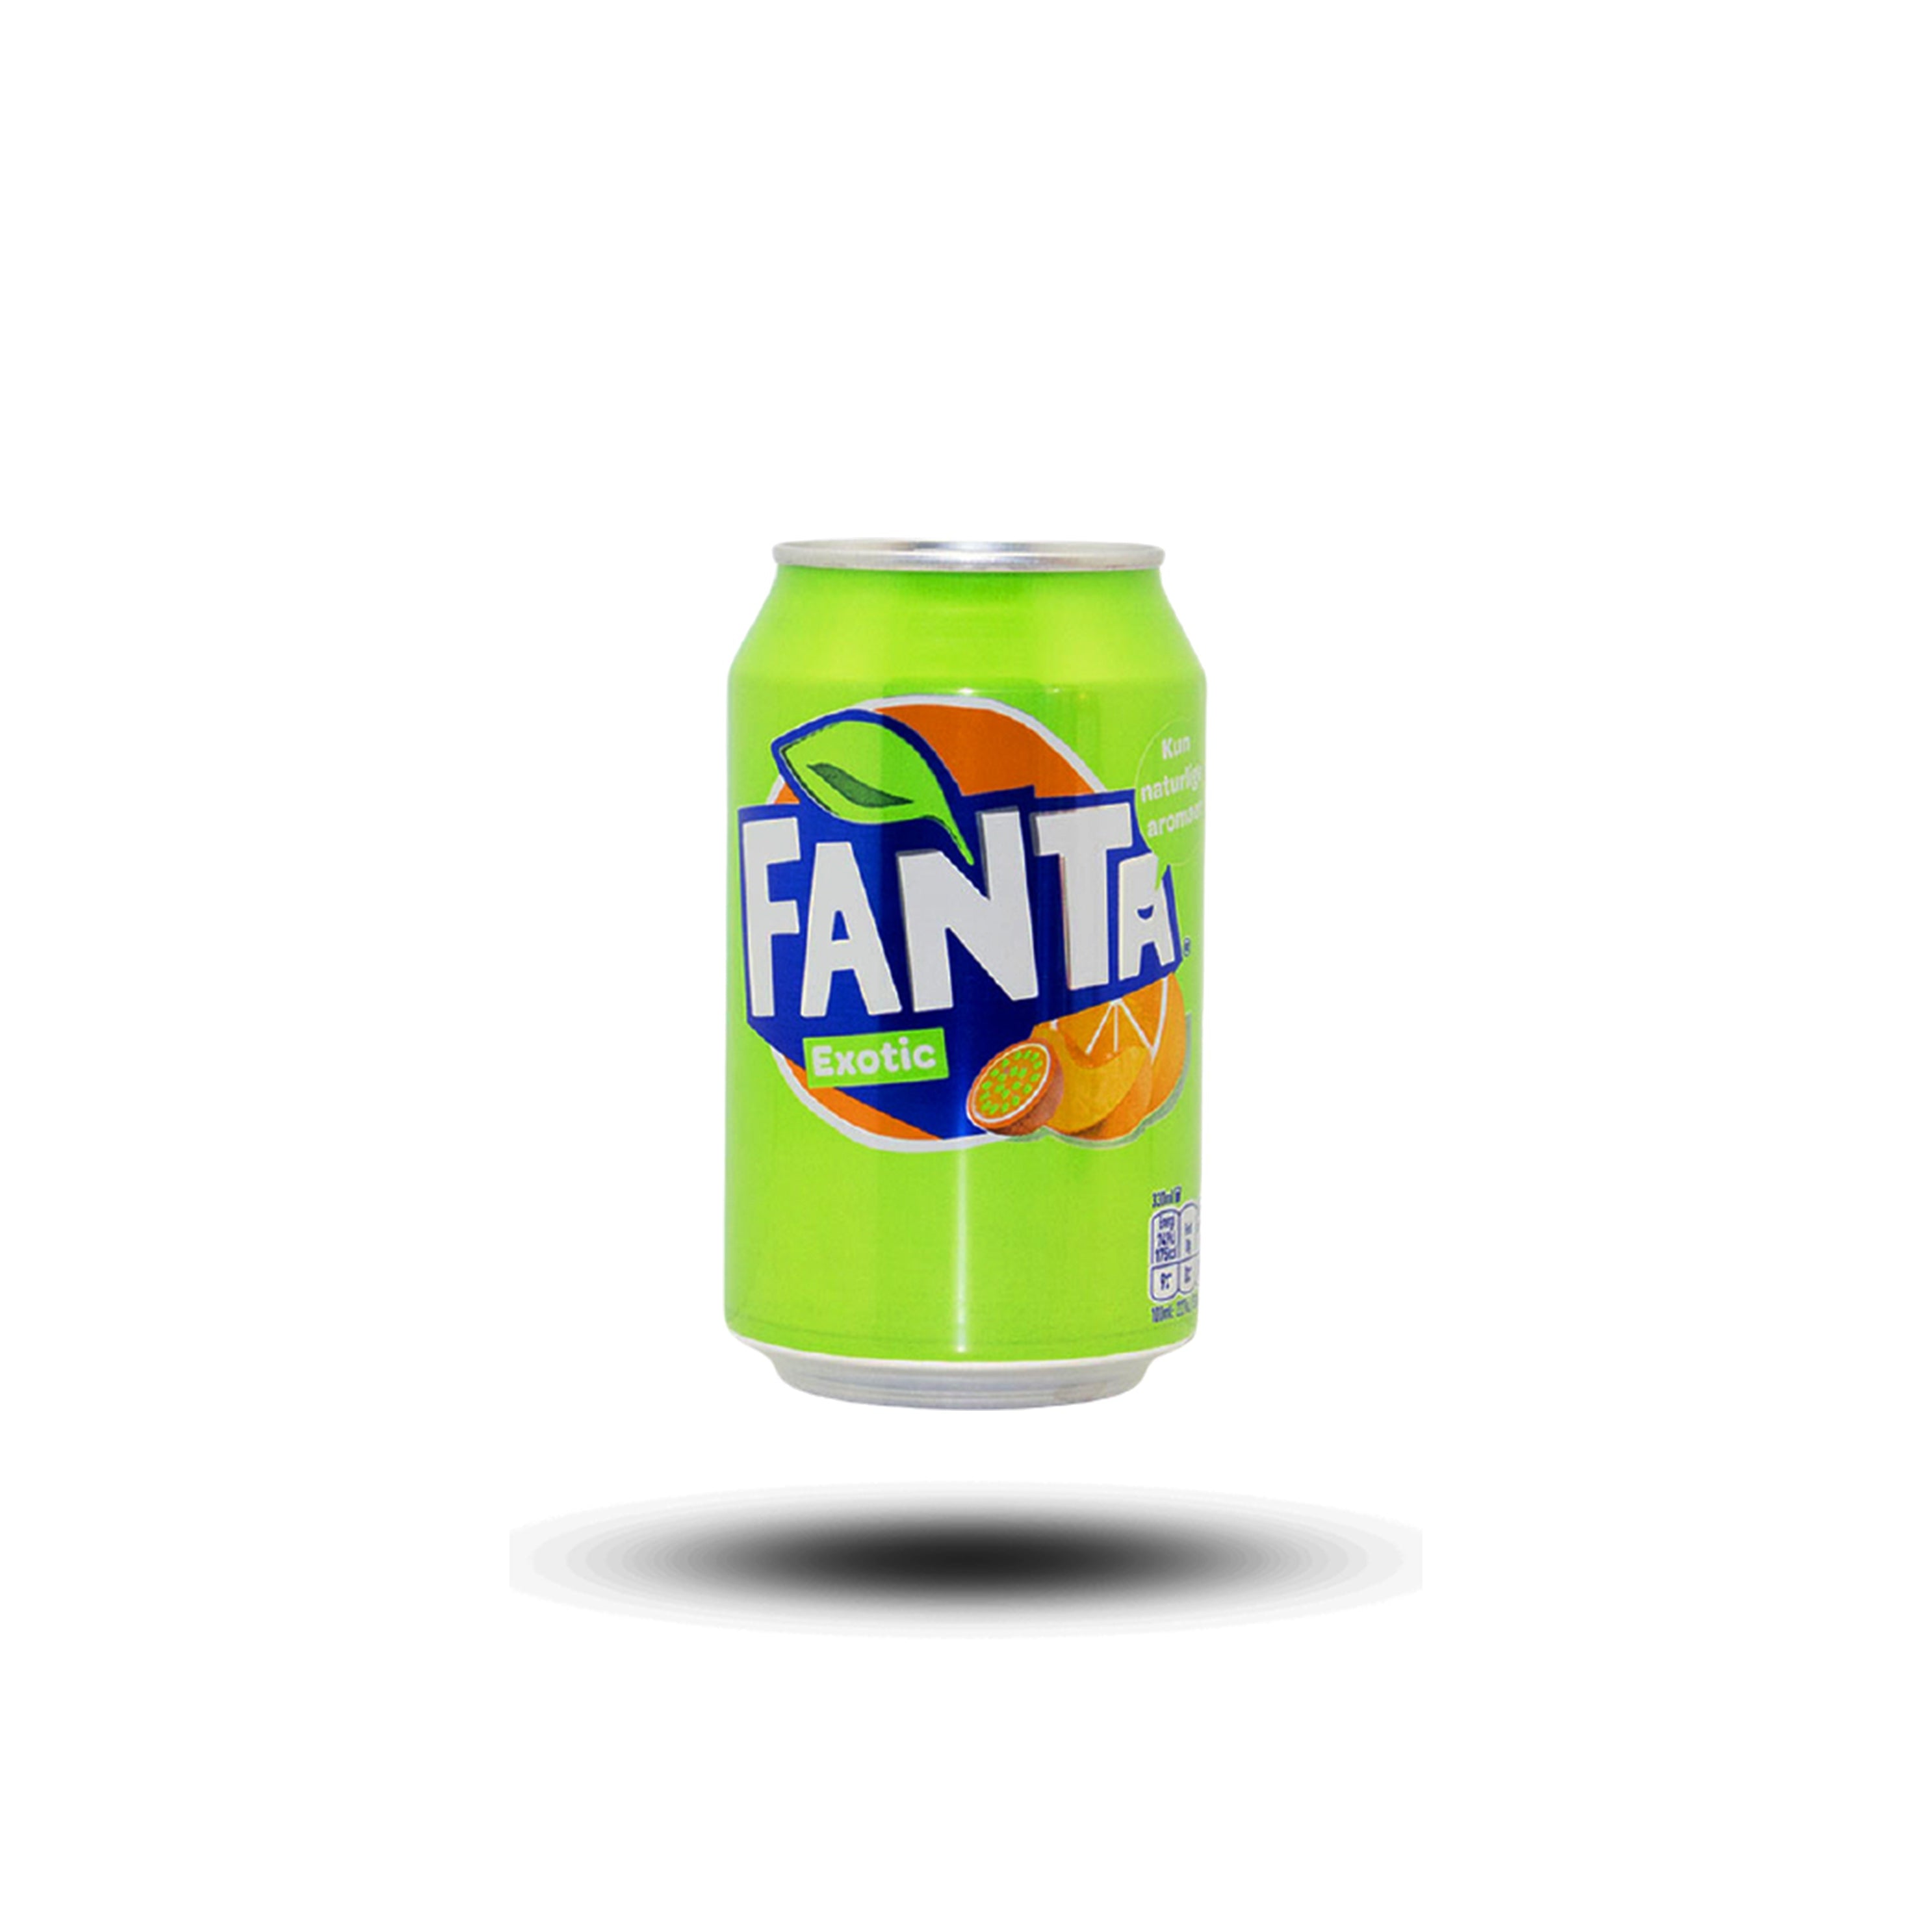 Fanta Exotic 330ml-Coca-Cola Company-SNACK SHOP AUSTRIA